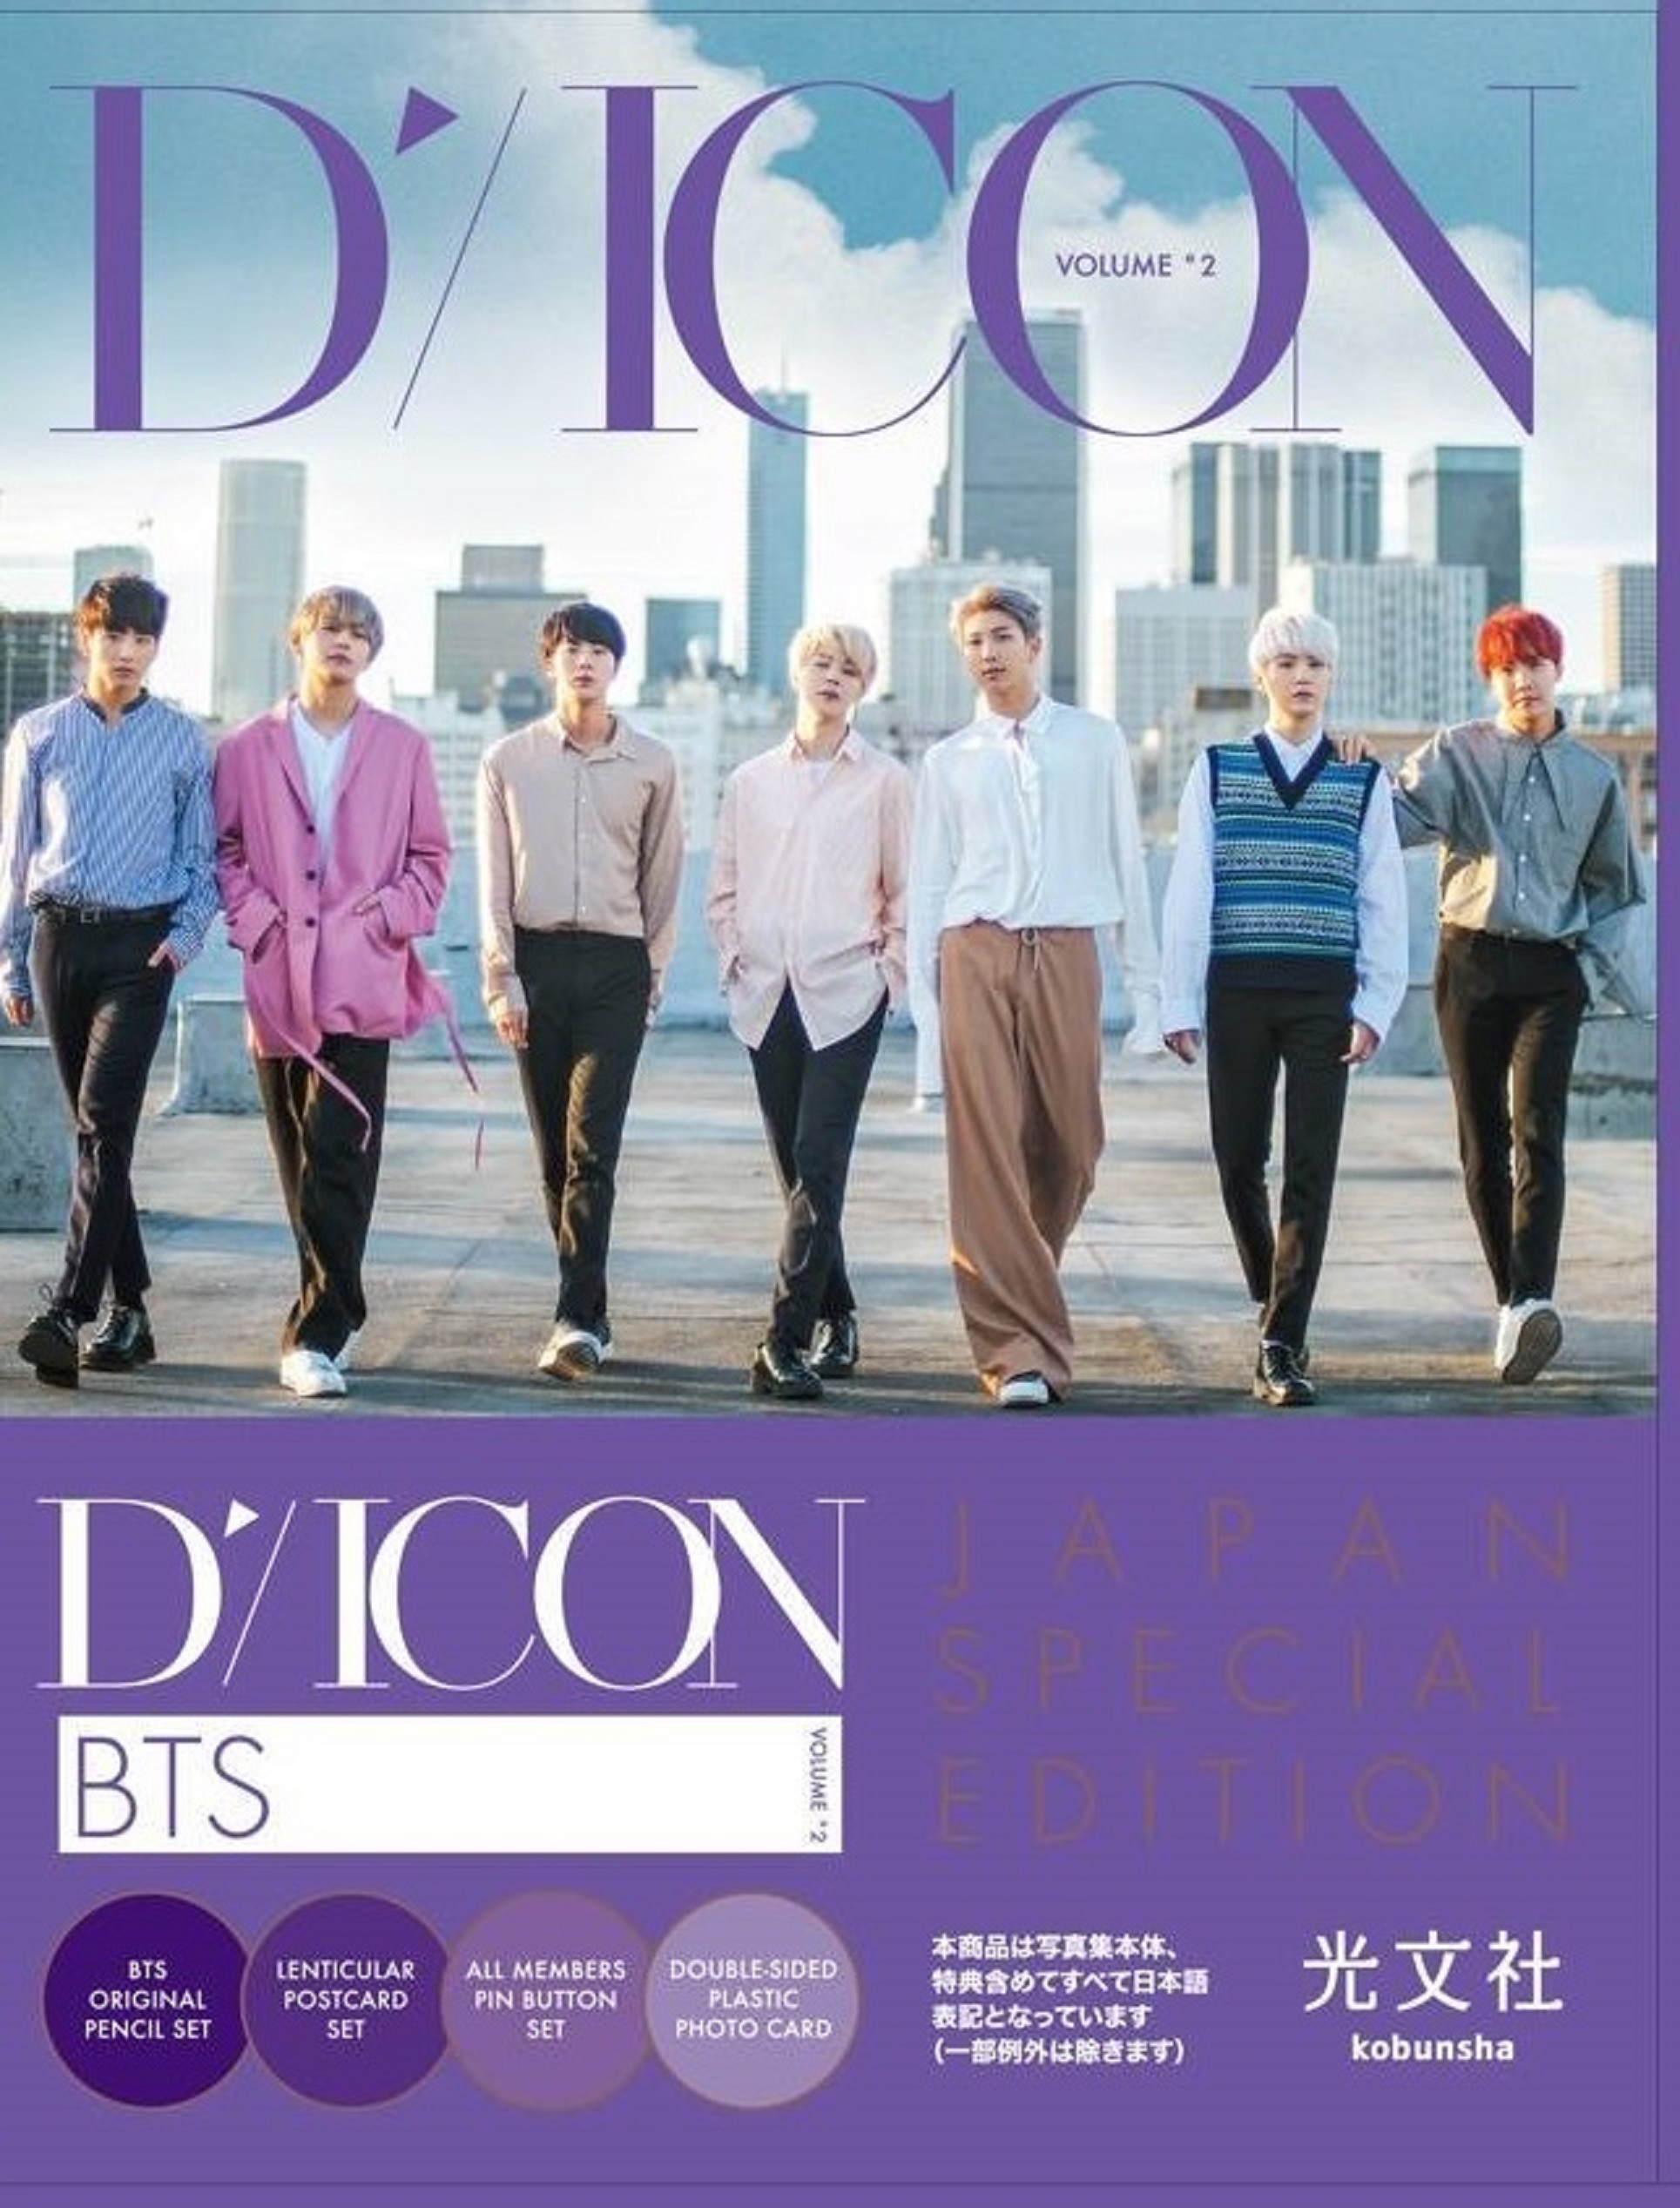 Dicon BTS 写真集 グク ジョングク 日本語訳付き 光文社 - K-POP/アジア